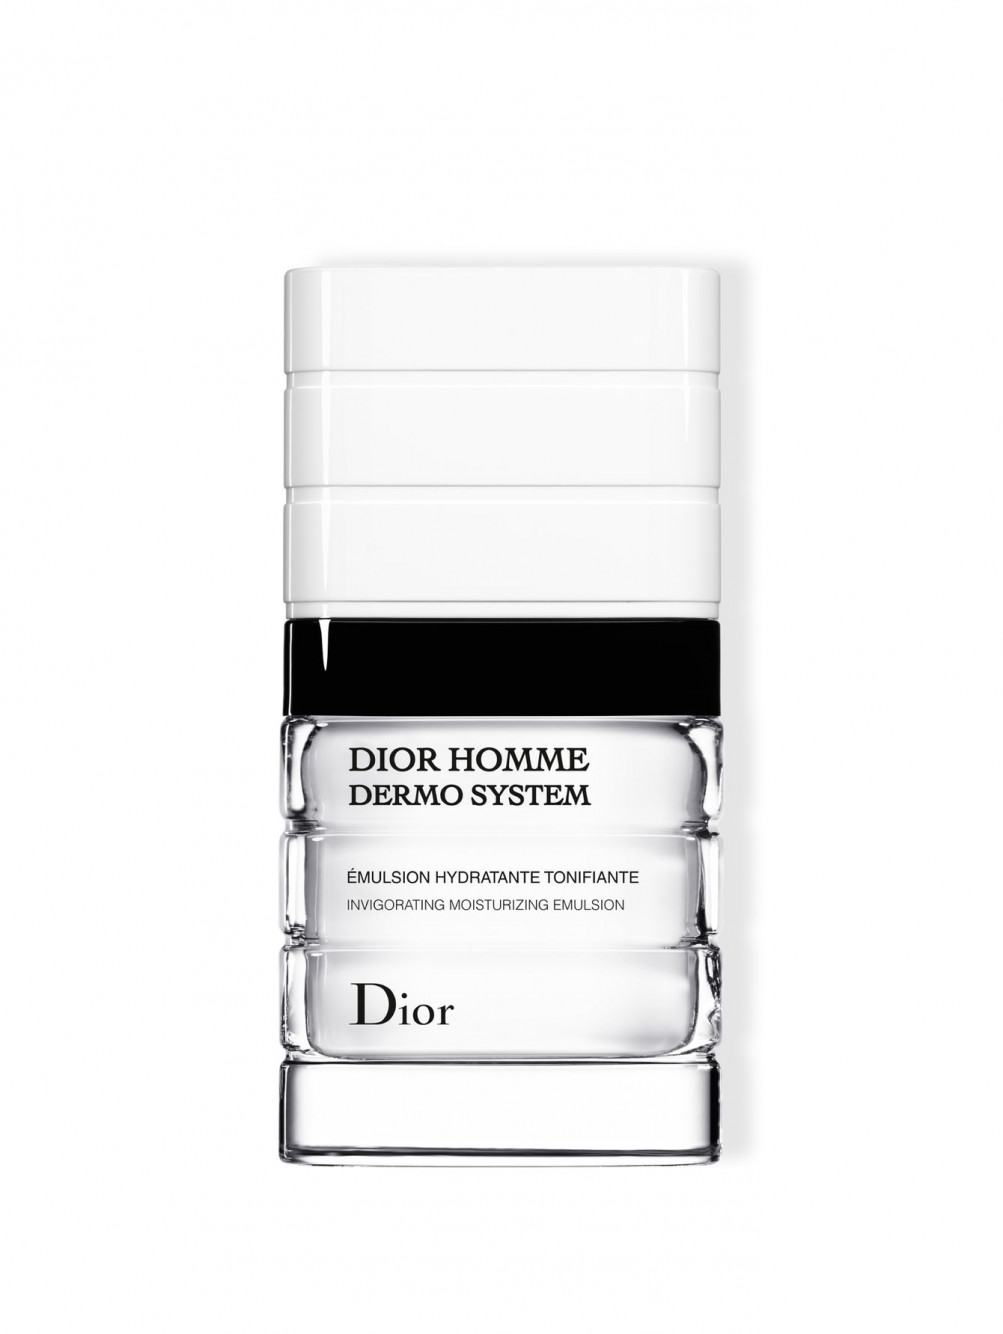 Dior Homme Dermo System Тонизириующая увлажняющая эмульсия 50 мл - Общий вид